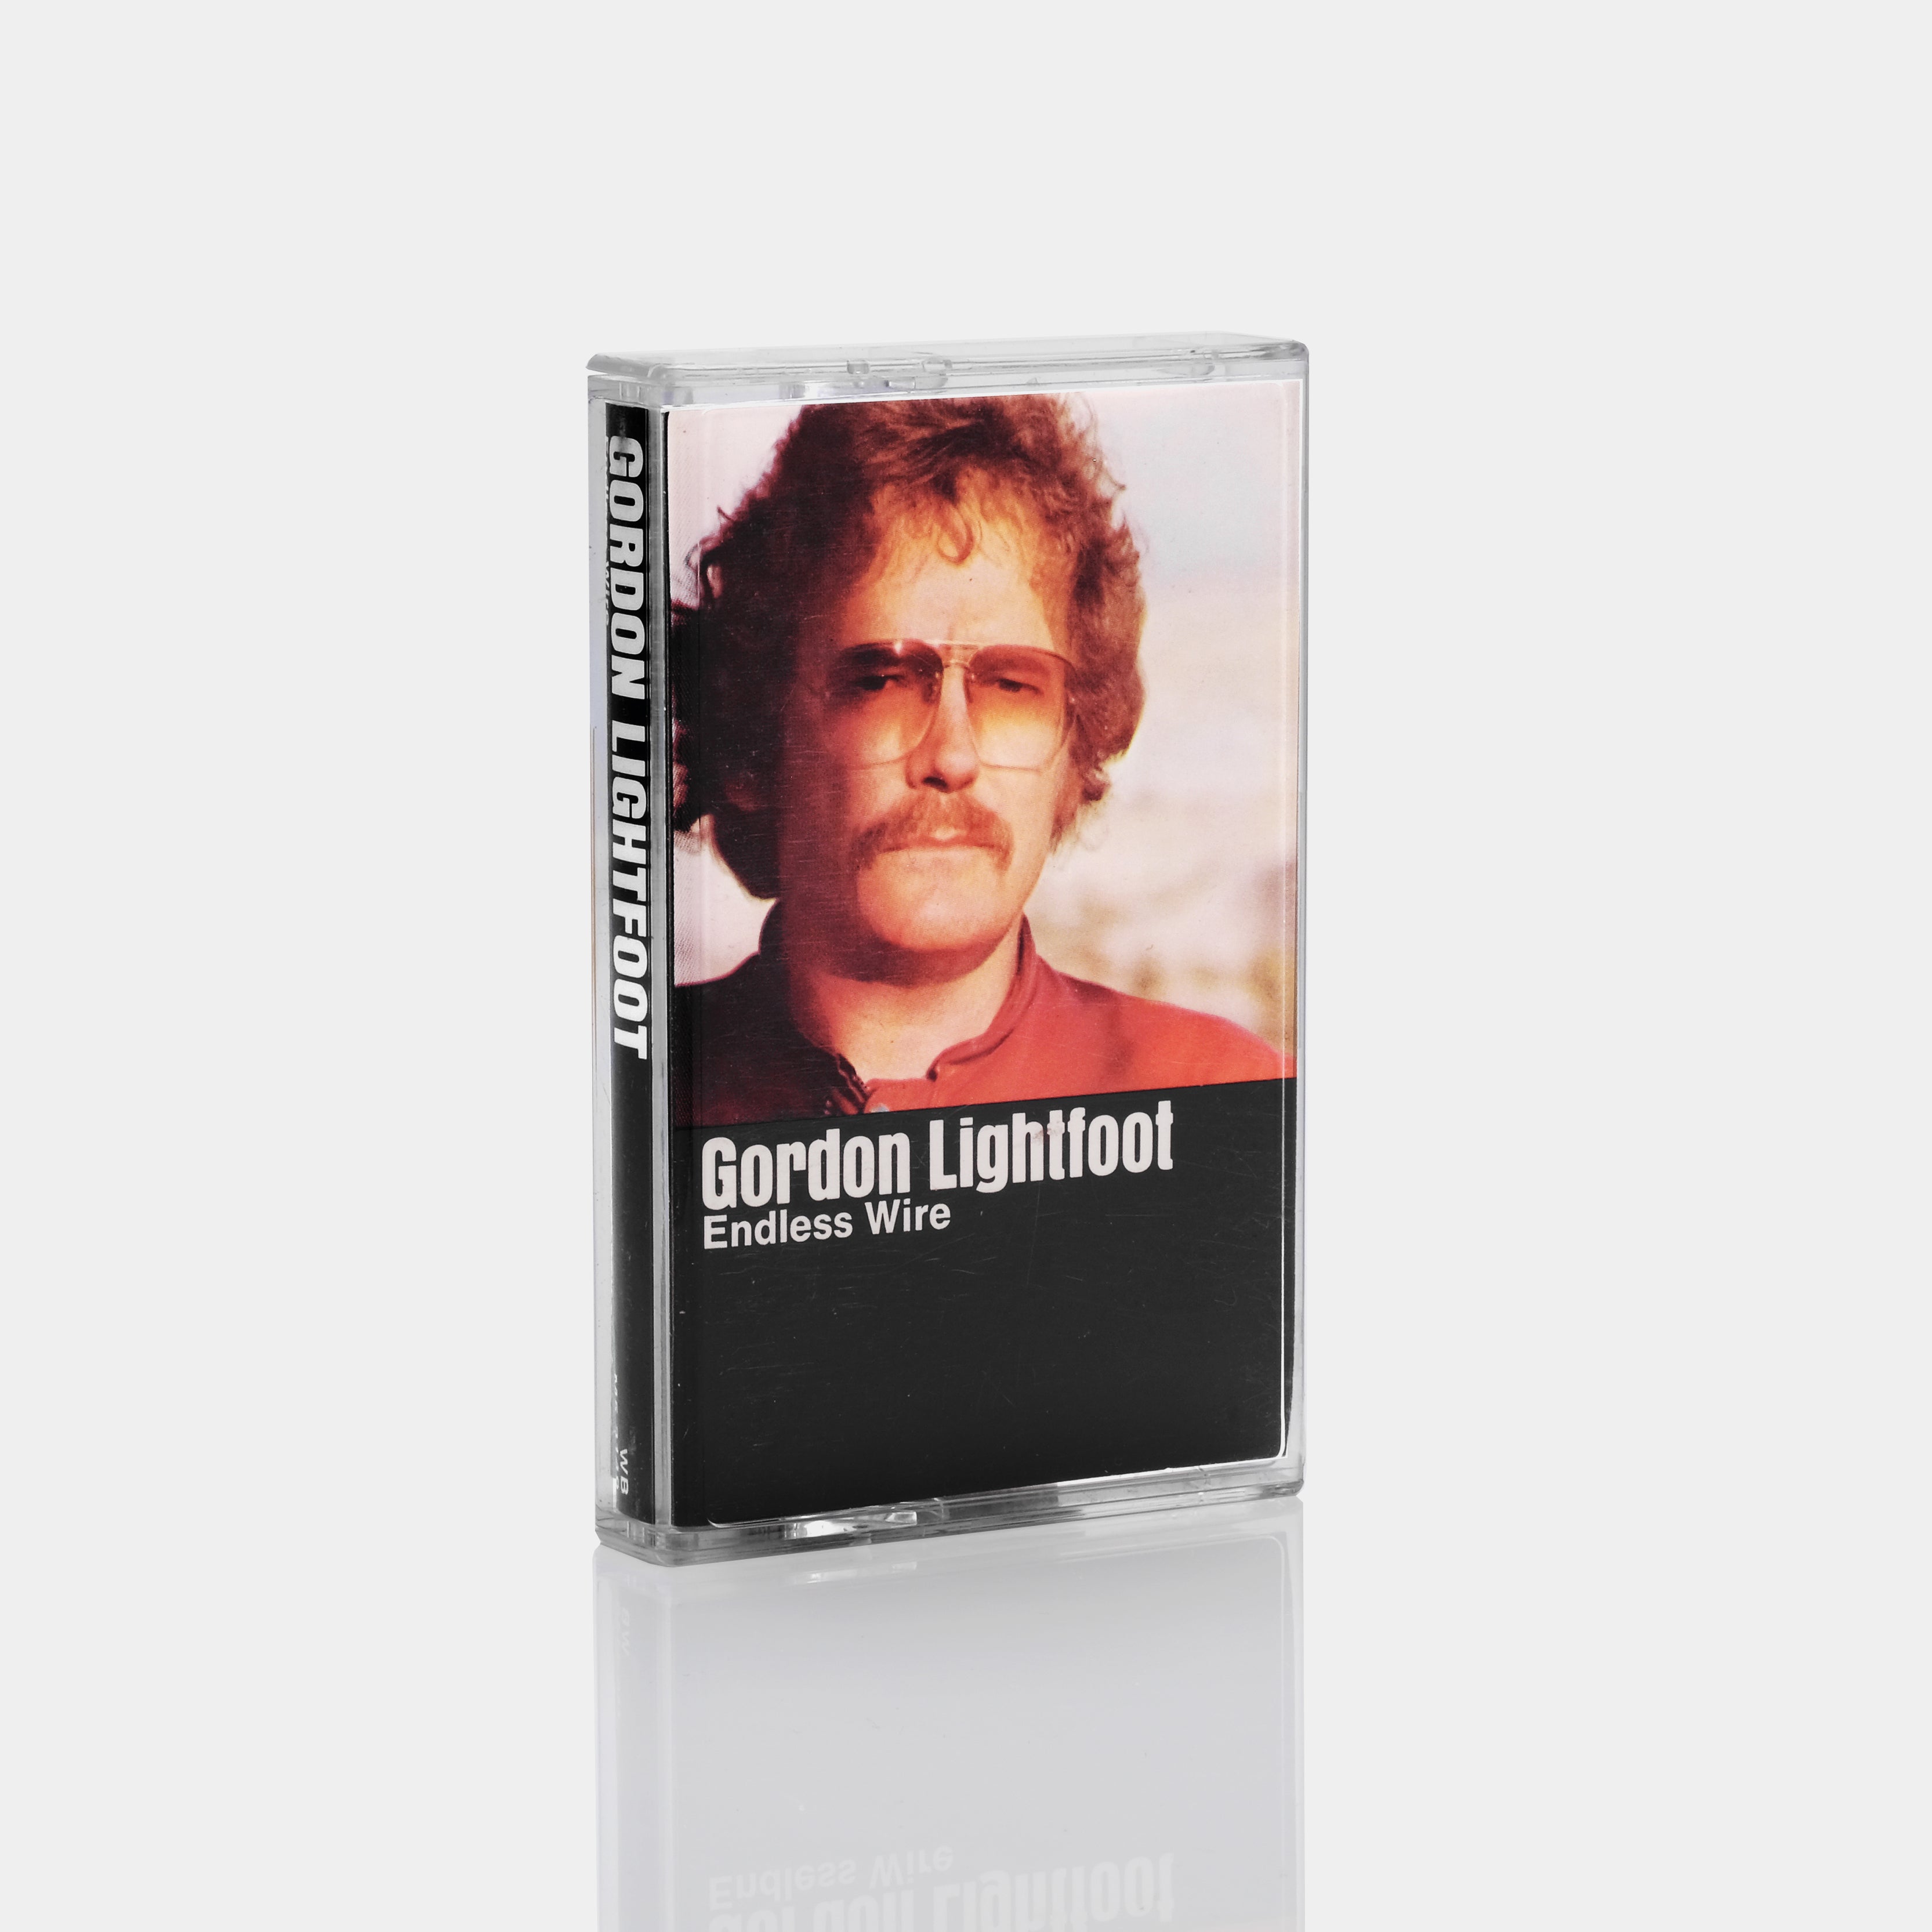 Gordon Lightfoot - Endless Wire Cassette Tape